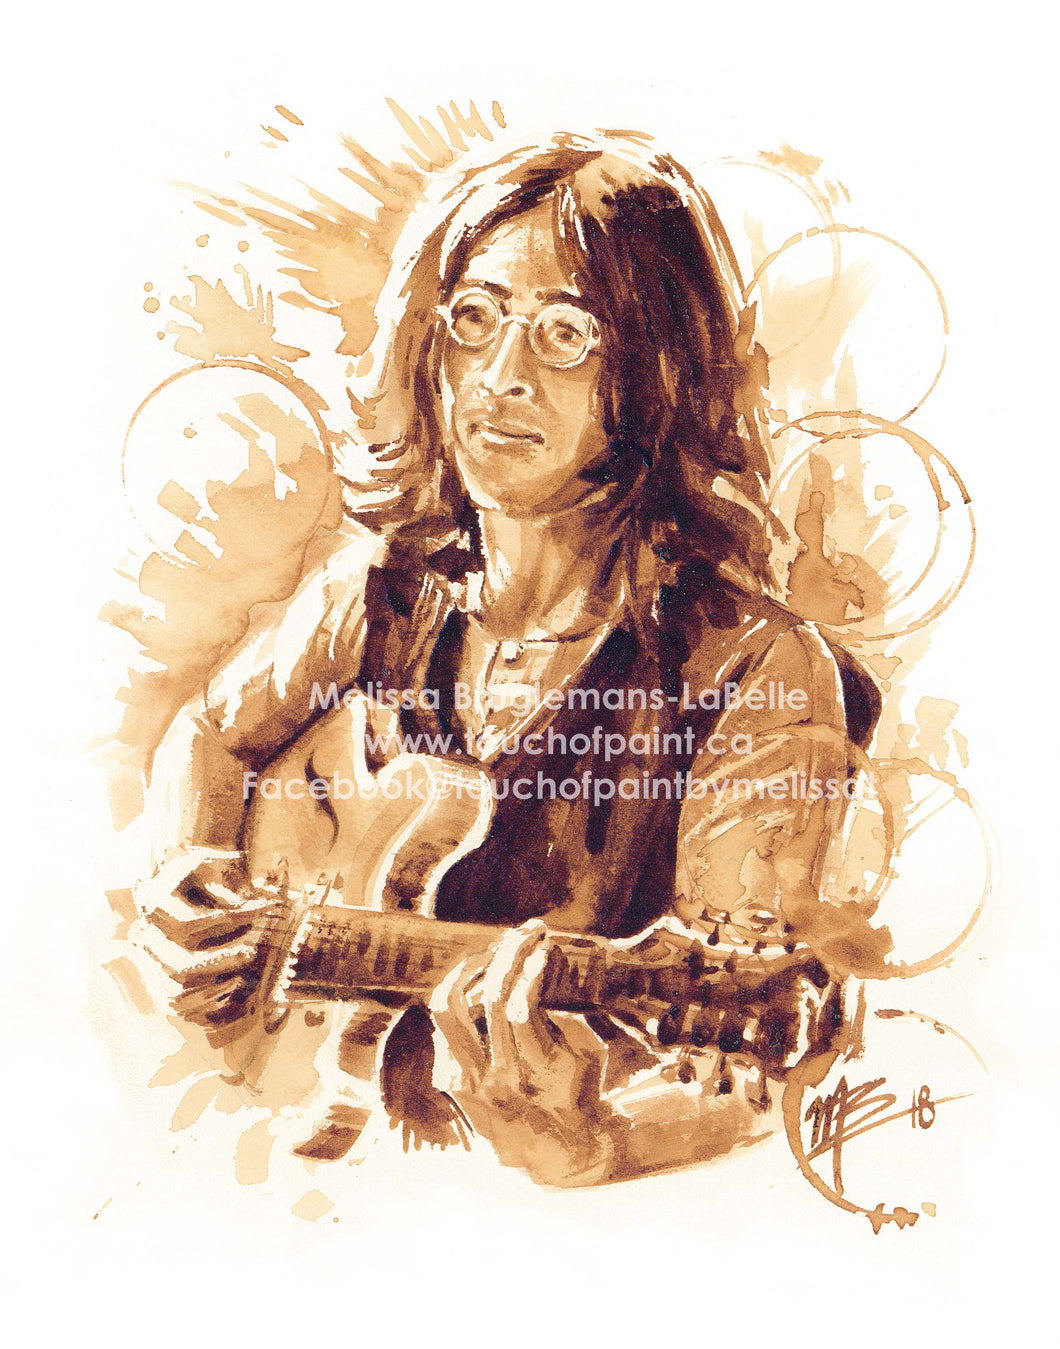 John Lennon: Working Class Hero - Coffee Painting Print